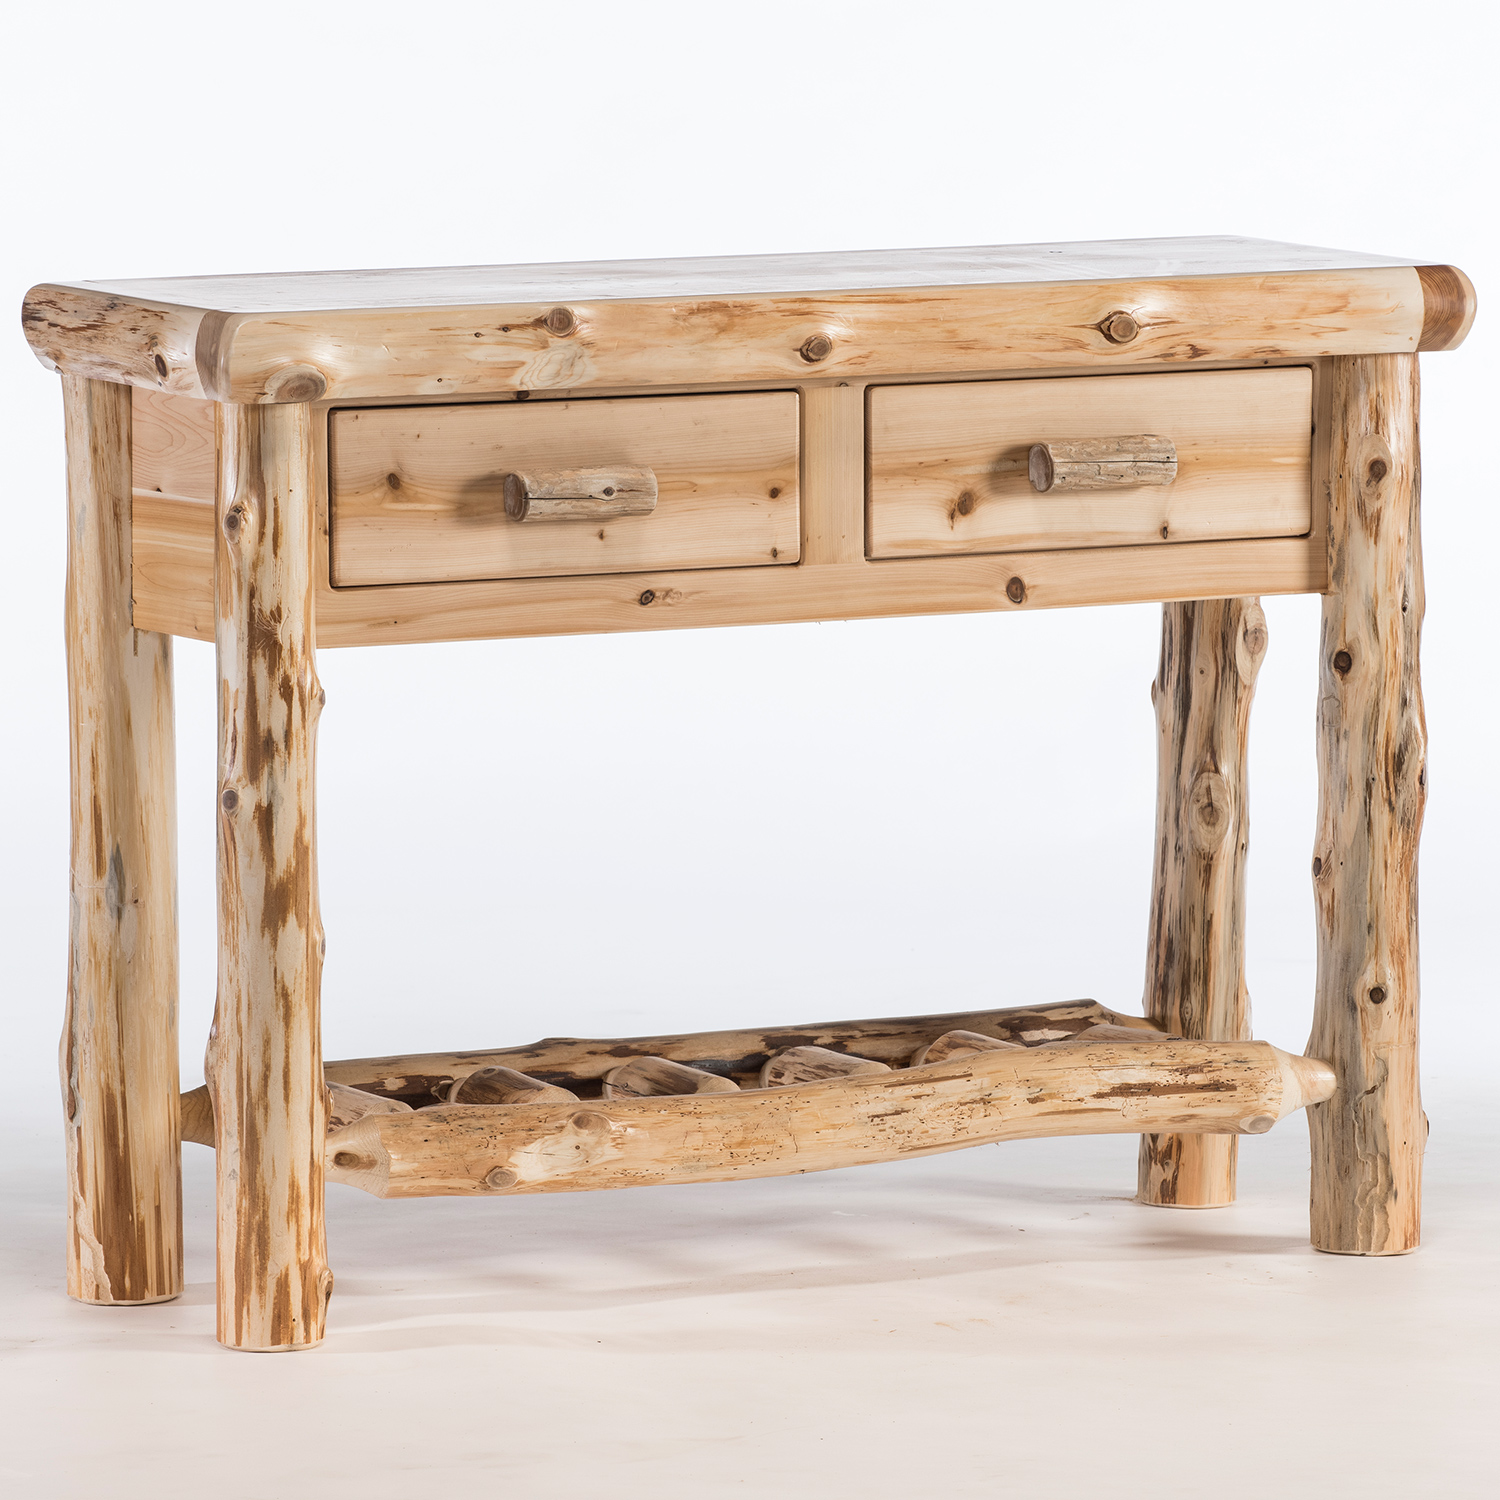 Image of Cedar Lake Cabin Log Sofa Table with Drawers